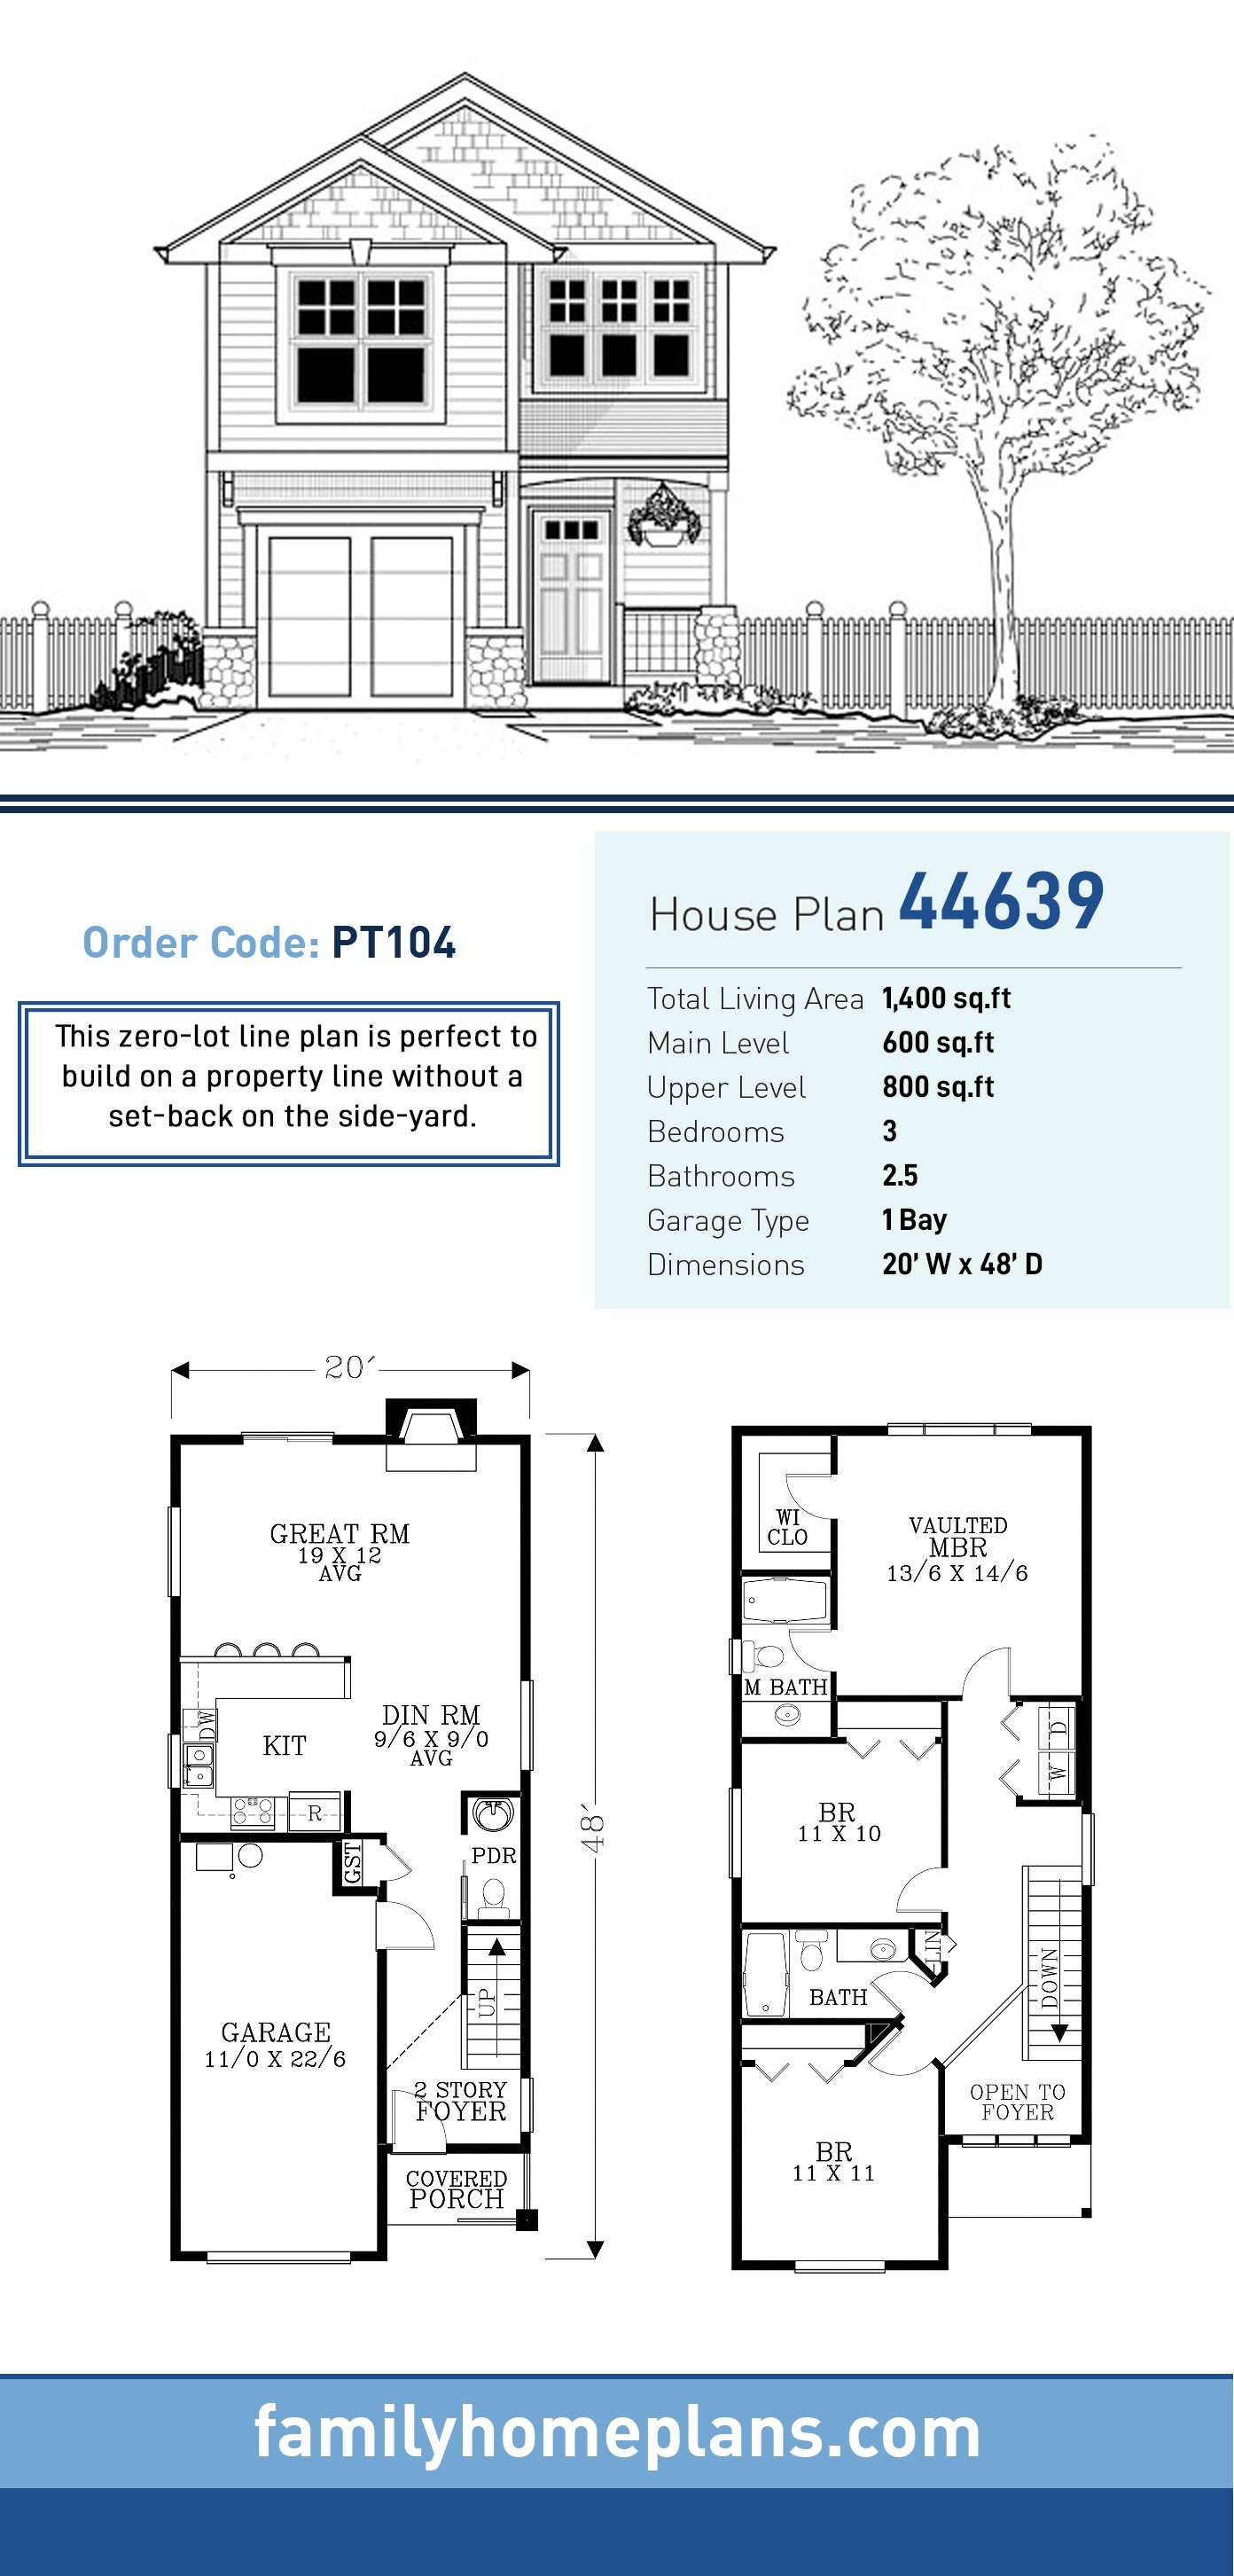 House Plan 44639